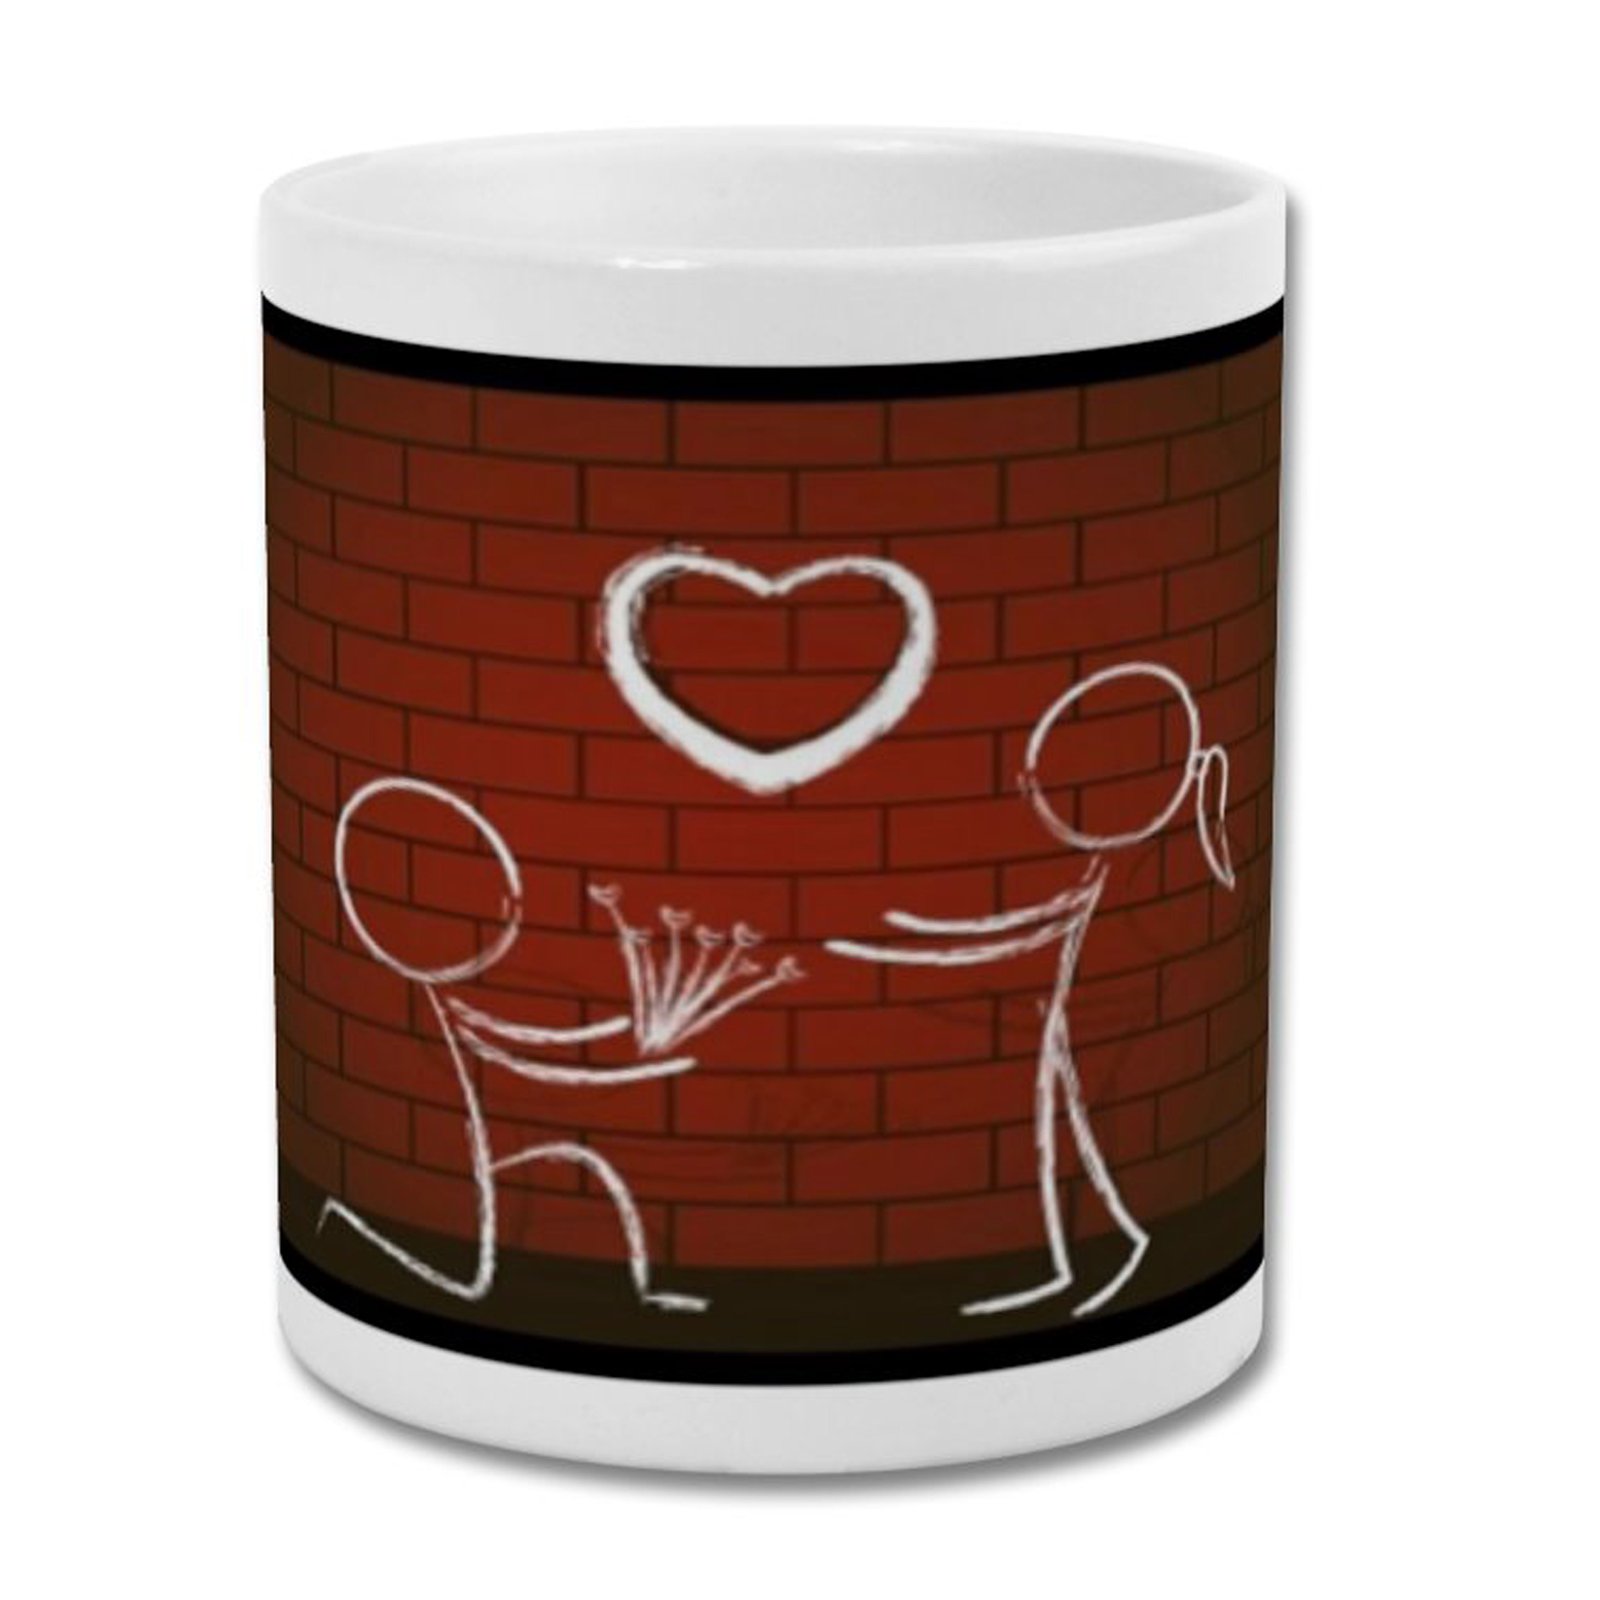 Fantaboy " I love you" graffiti printed Coffee Mug